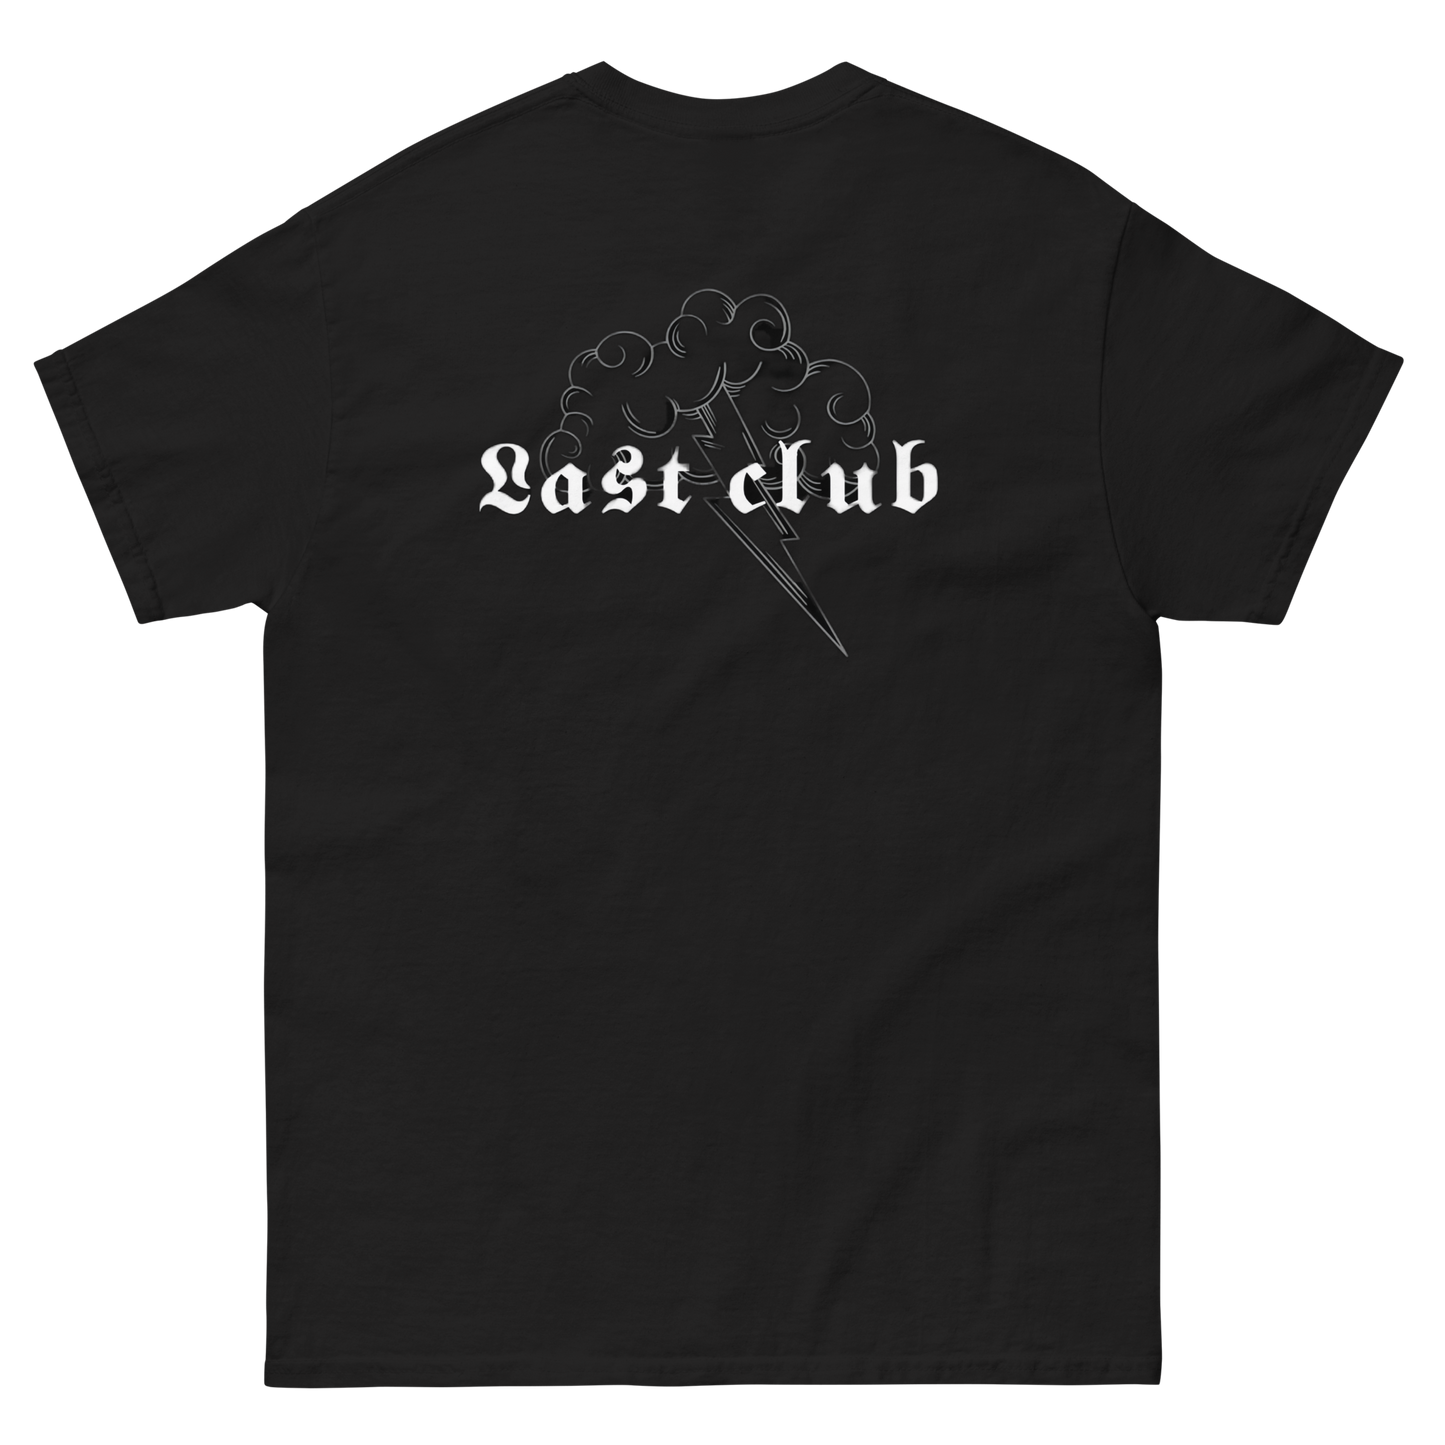 Last club t-shirt